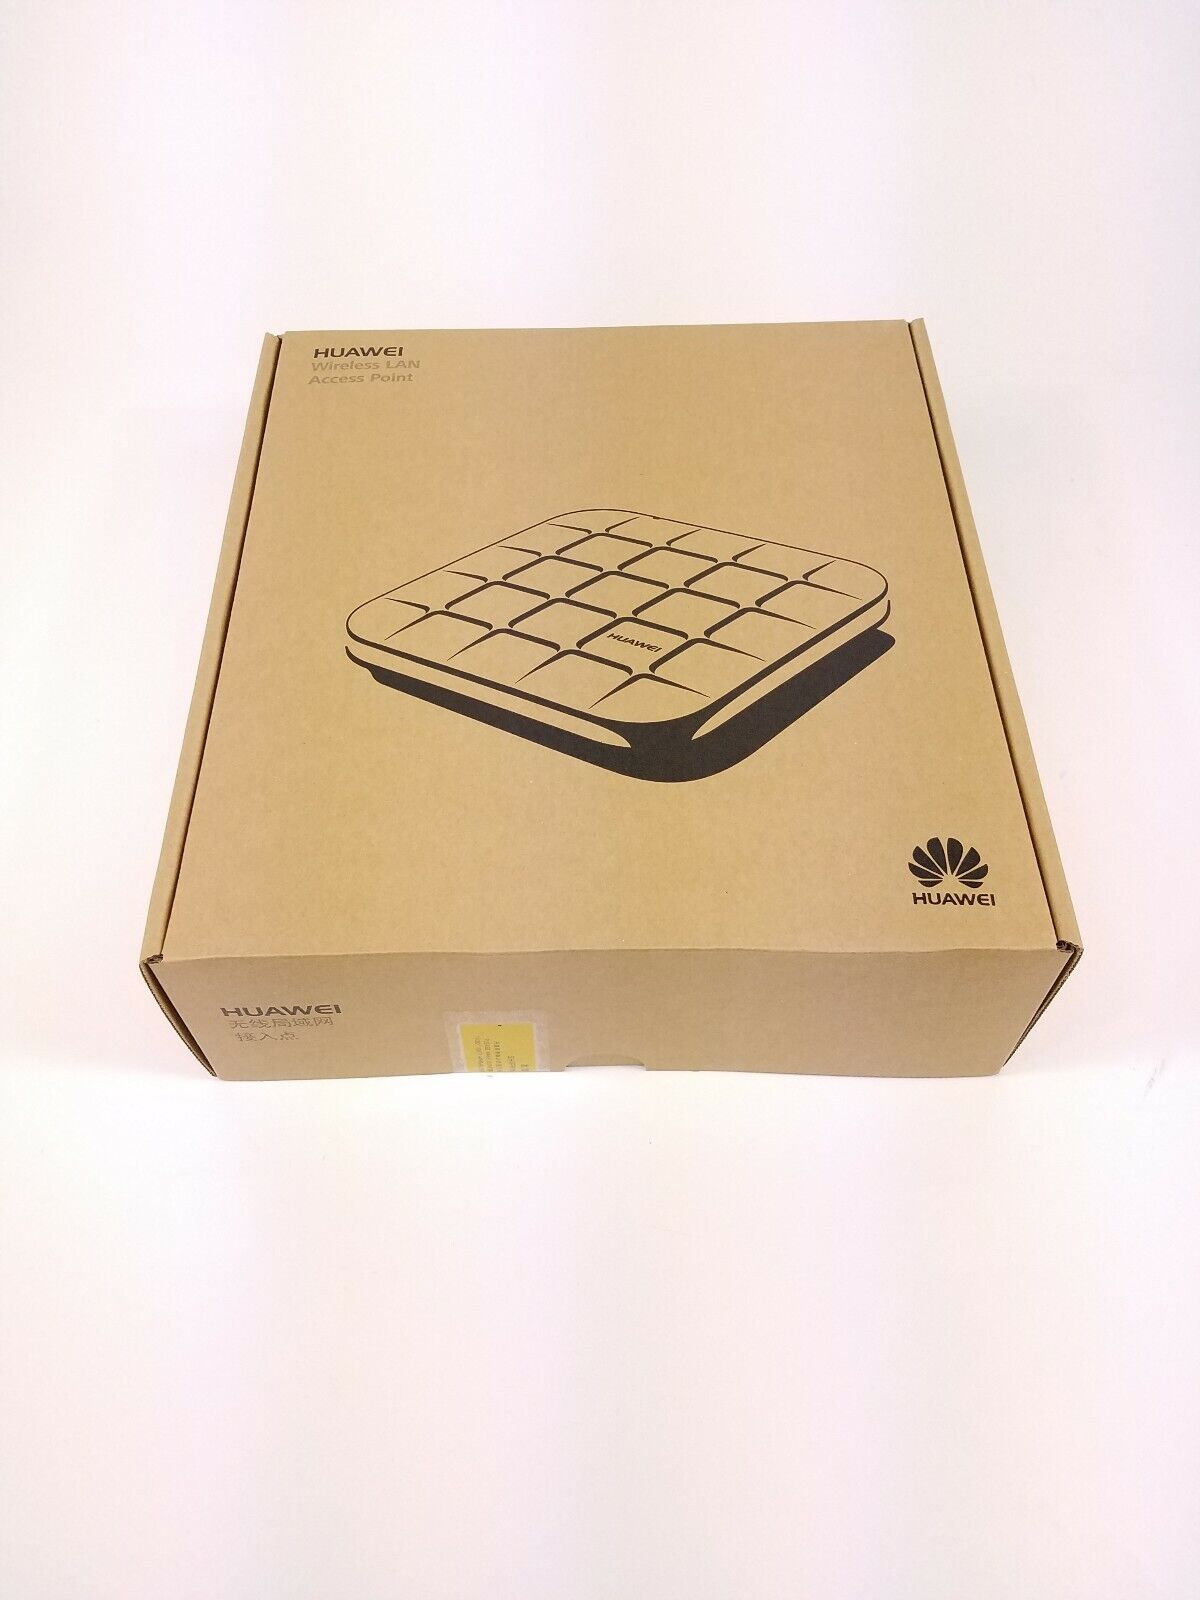 Huawei AP7050DE-USA Wireless Access Point AP New In Box